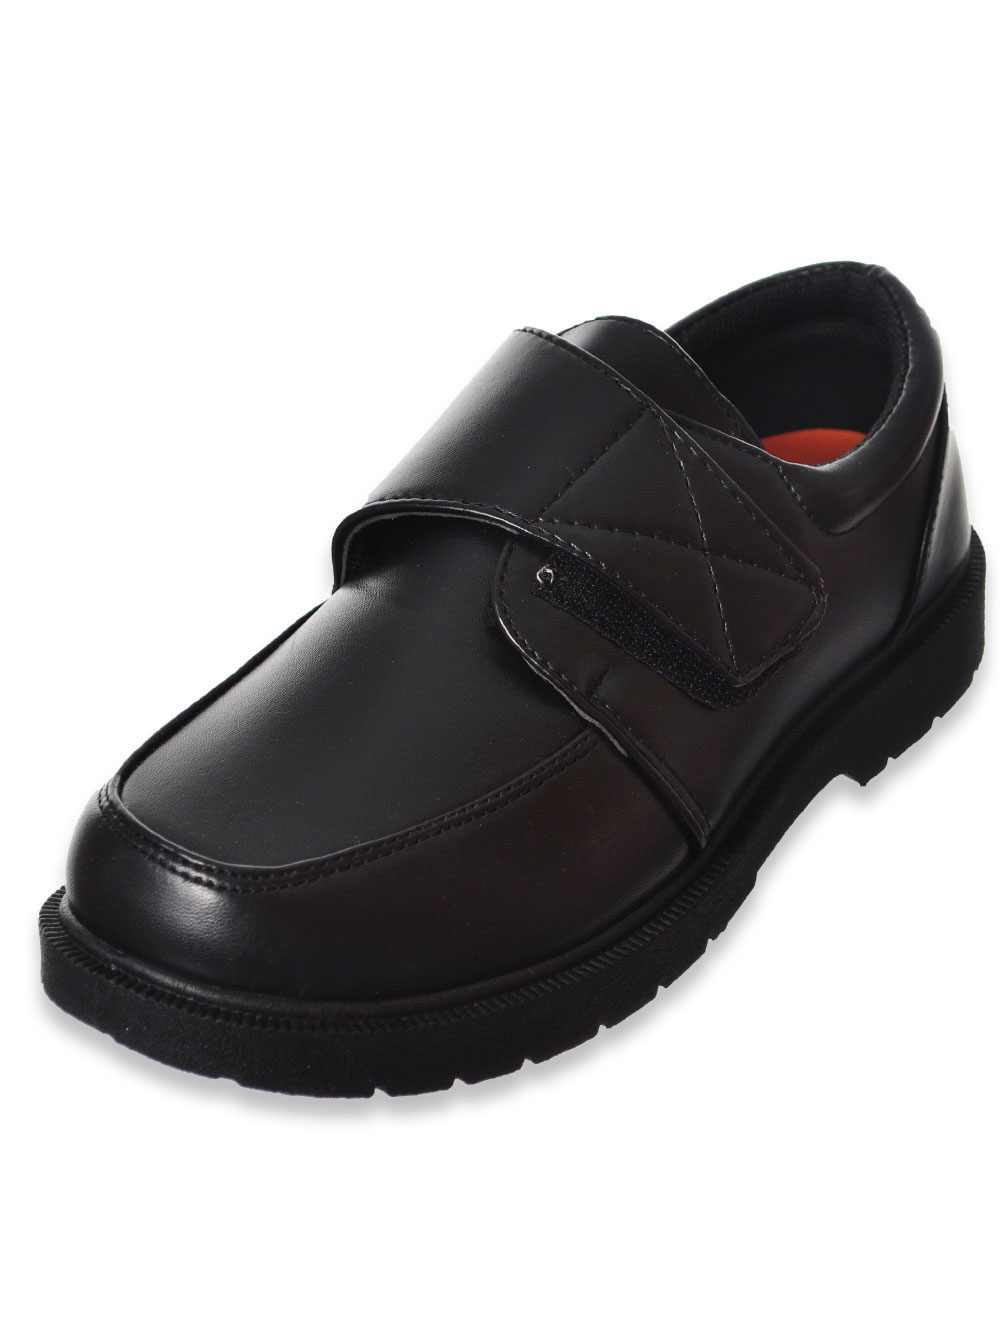 black school shoes girl size 5